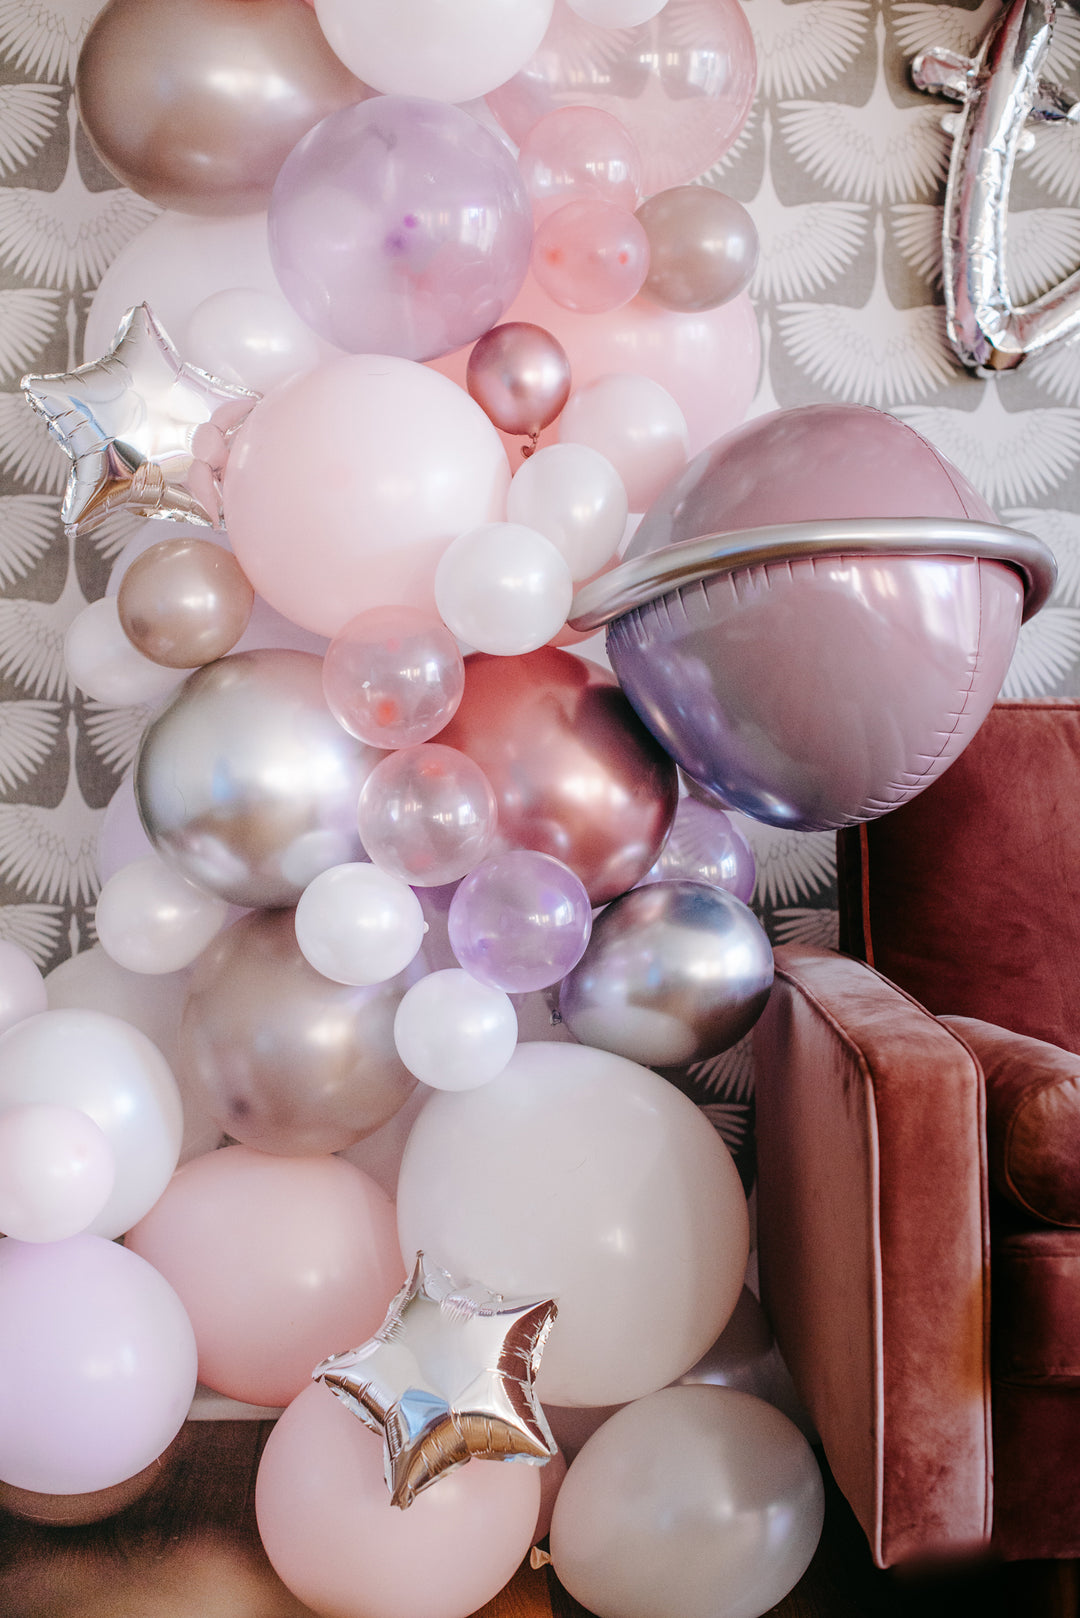 DIY Photo Backdrop & Balloon Garland: You'll need 1-2 8 ft tall